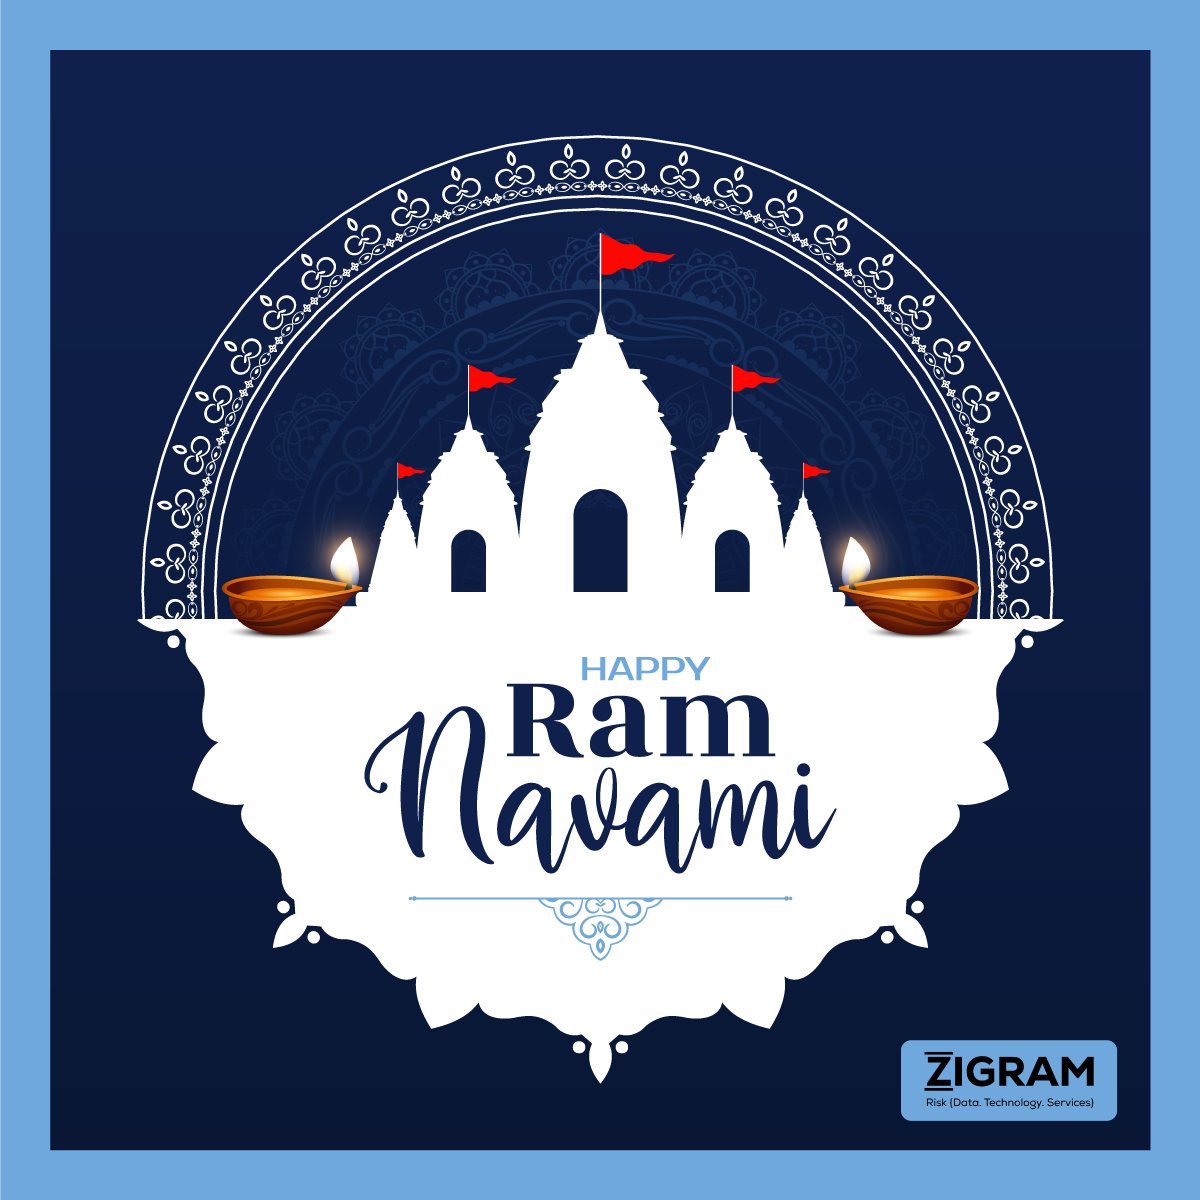 '🌟 Celebrating the birth of Lord Rama, embodiment of virtue and righteousness, on Ram Navami! 🙏 

#RamNavami #DivineBlessings #FestivalOfFaith #HinduTradition #SpiritualJourney'